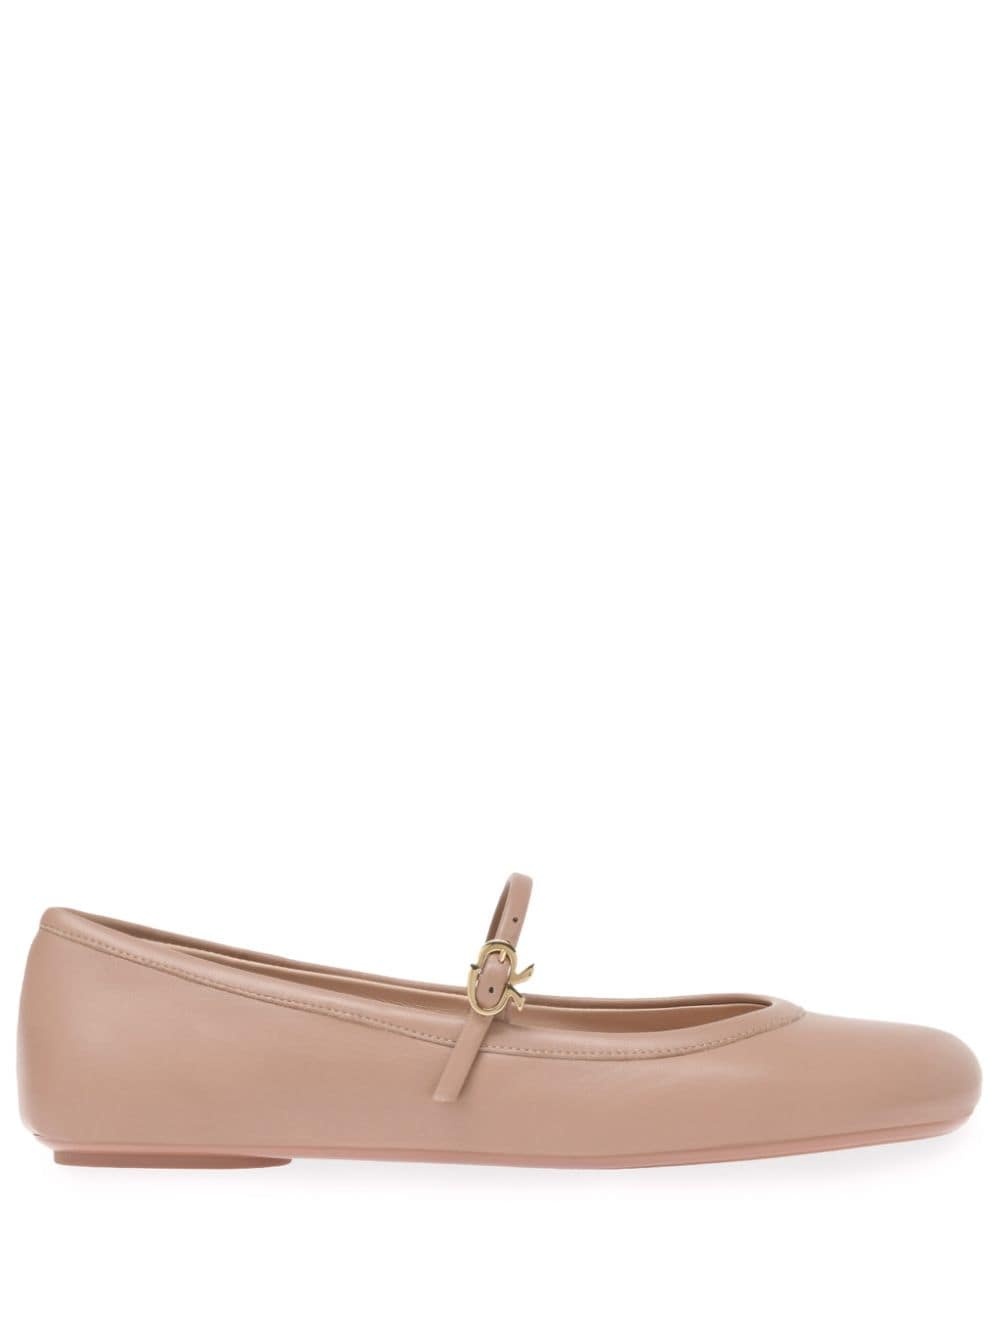 Carla leather ballerina shoes - 1